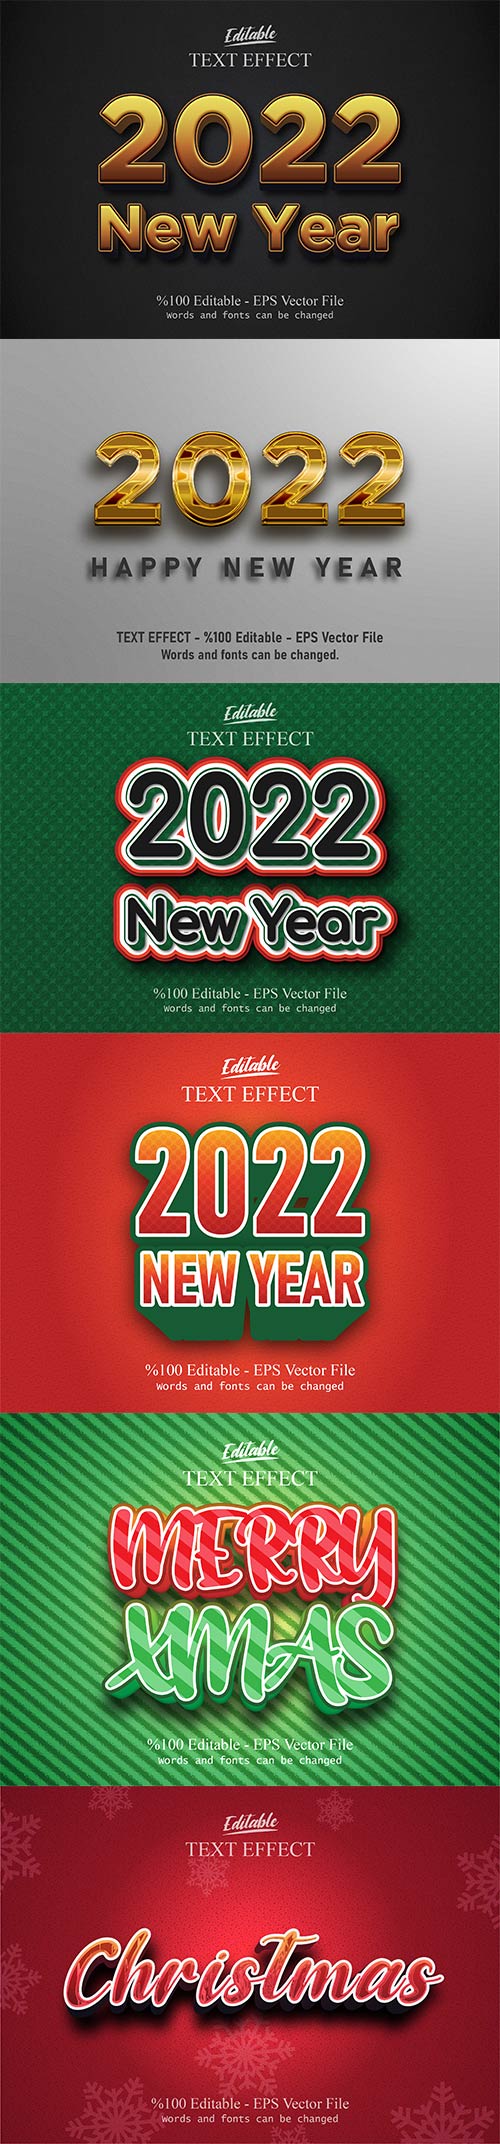 2022 New year, Merry christmas editable text effect premium vector vol 4